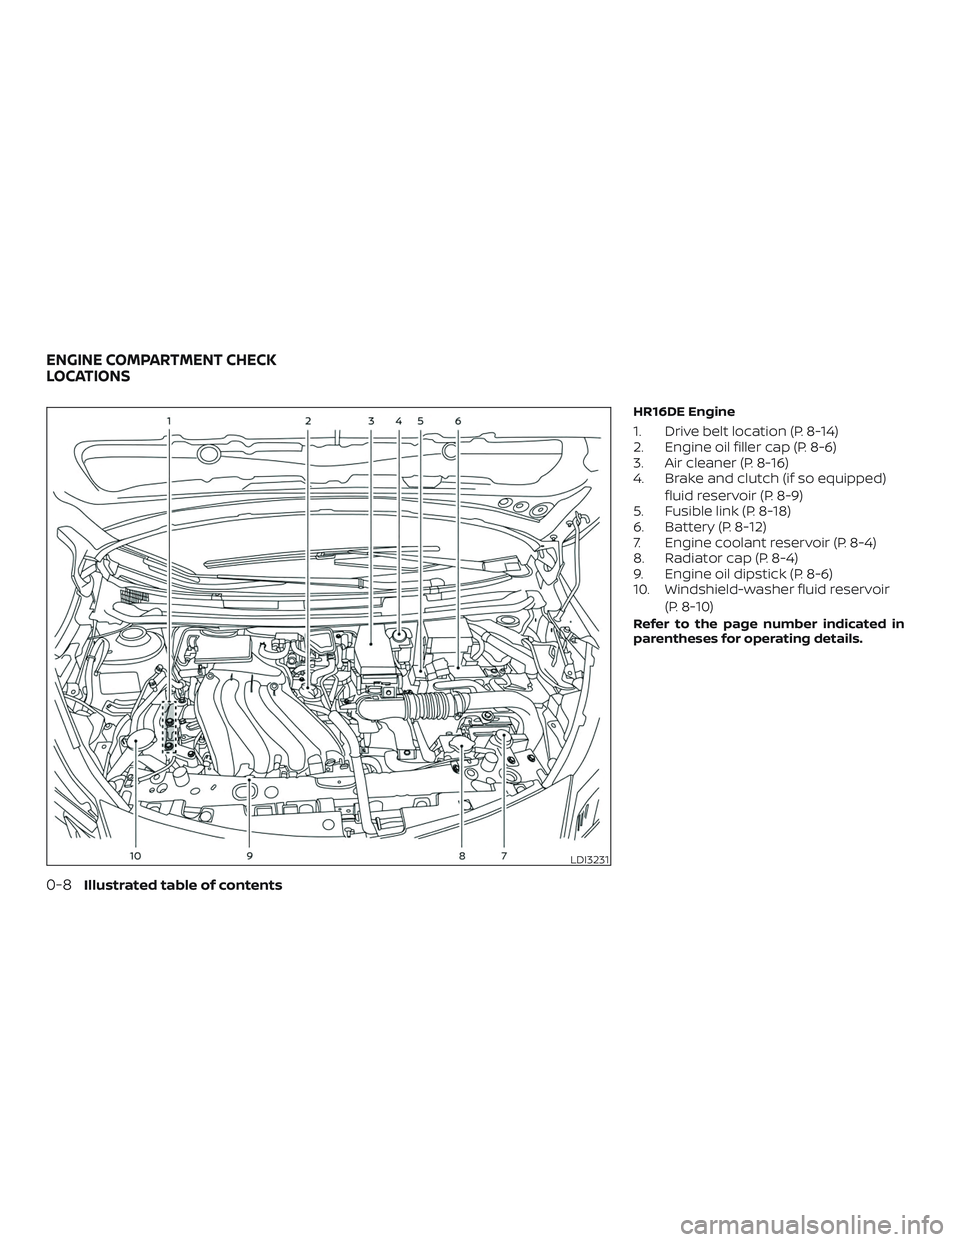 NISSAN VERSA SEDAN 2019  Owner´s Manual HR16DE Engine
1. Drive belt location (P. 8-14)
2. Engine oil filler cap (P. 8-6)
3. Air cleaner (P. 8-16)
4. Brake and clutch (if so equipped)fluid reservoir (P. 8-9)
5. Fusible link (P. 8-18)
6. Batt